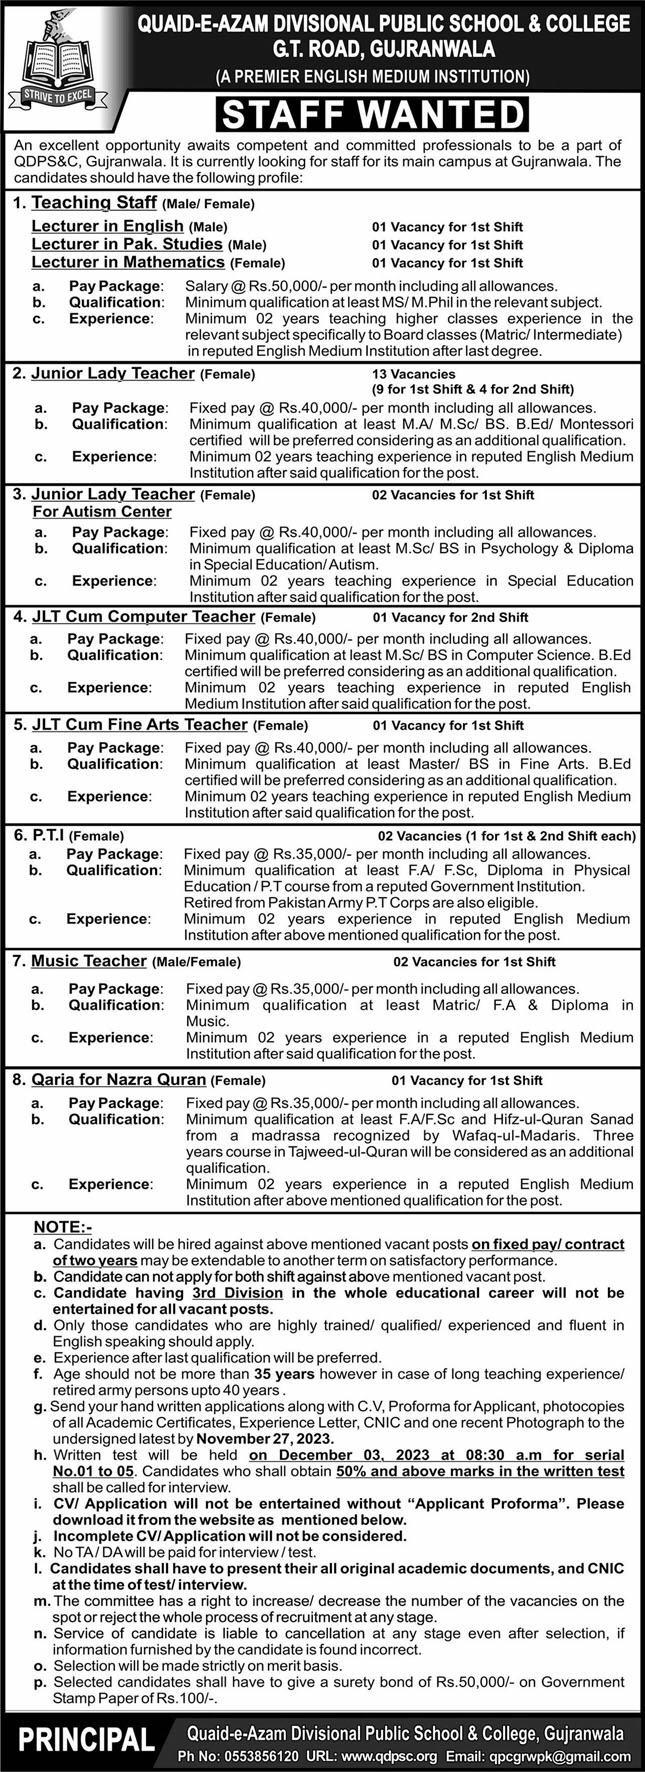 Quaid-e-Azam Divisional Public School Jobs 2023 for Lecturer and Lady Teachers